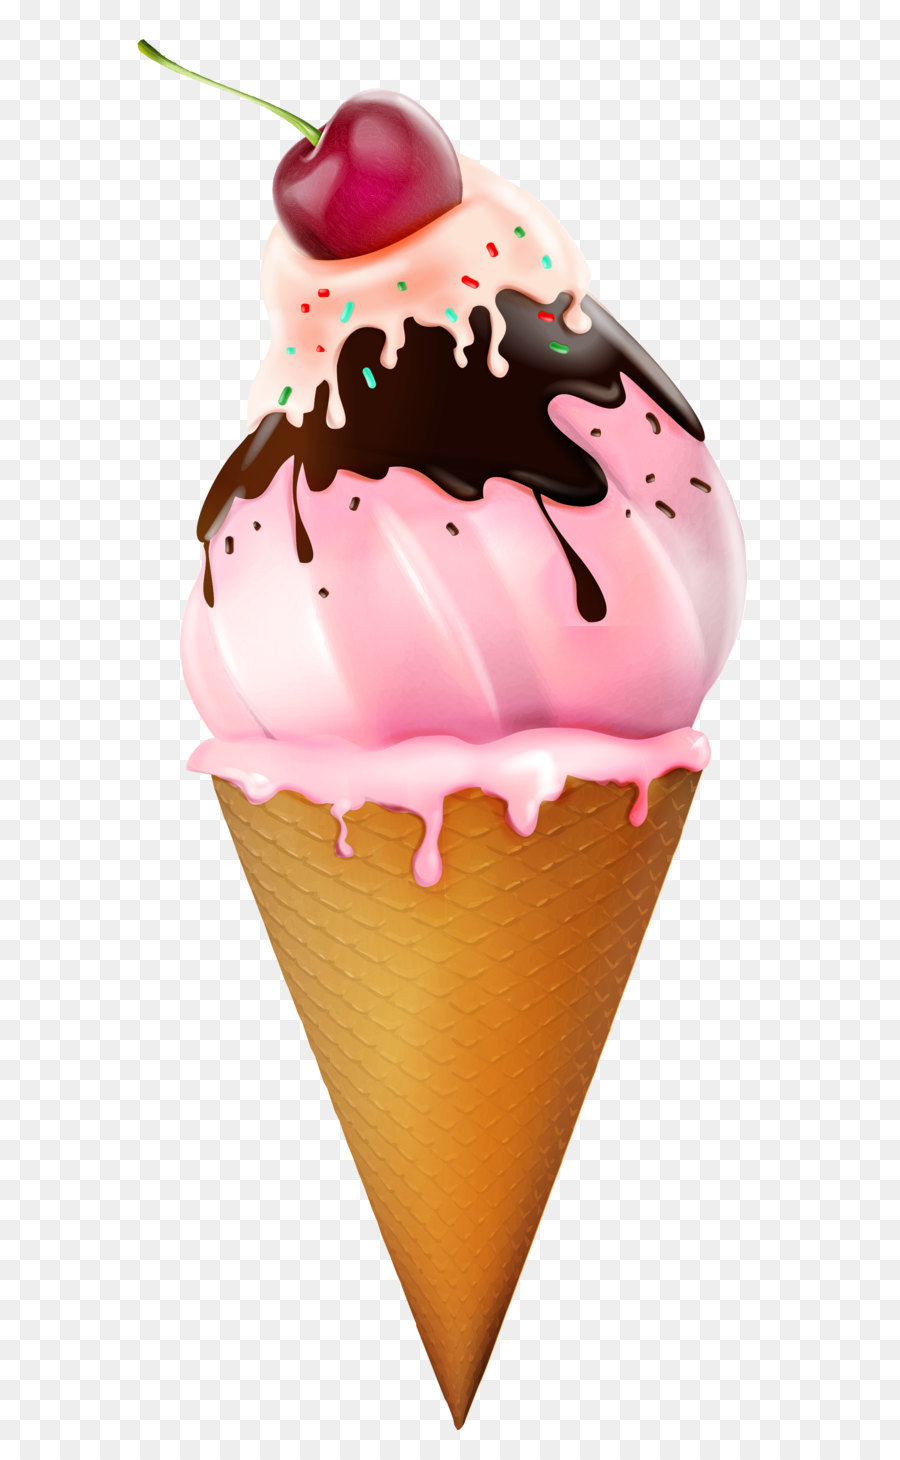 Ice cream cone Sundae Clip art - Transparent Ice Cream Cone Picture Clipart png download - 1724*3831 - Free Transparent Ice Cream png Download.